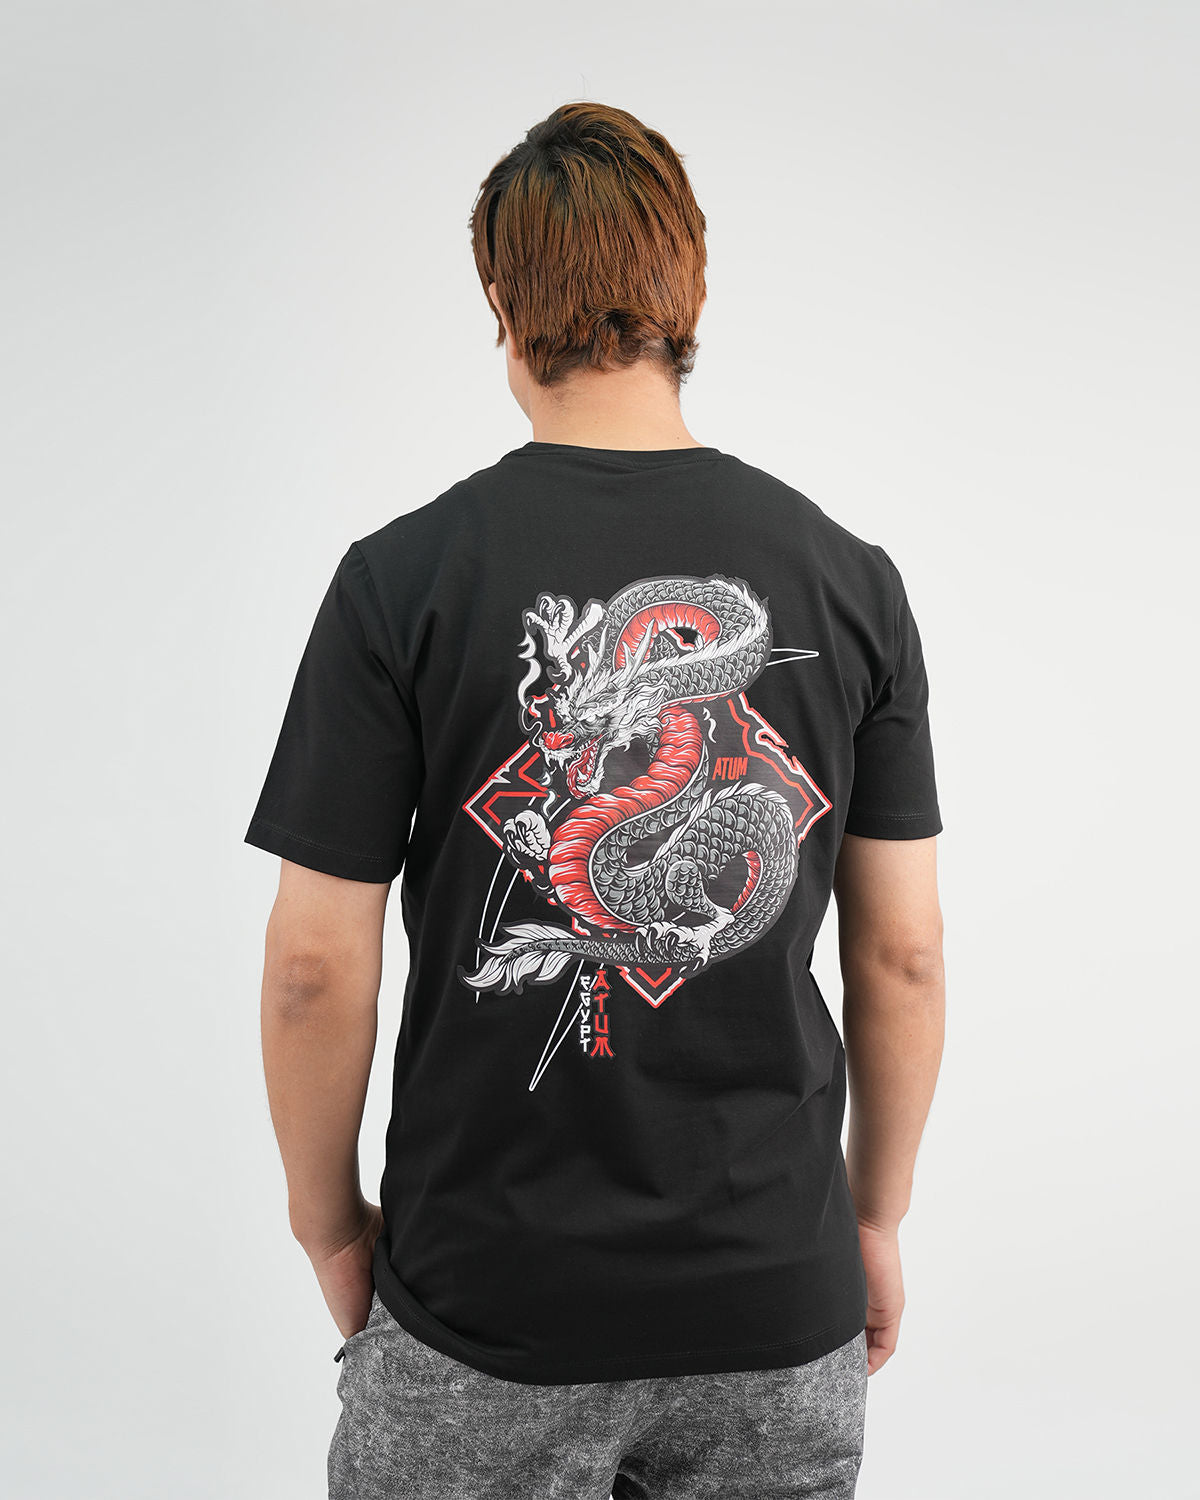 Cobra Strike Graphic Men's Tee - Black with red cobra print